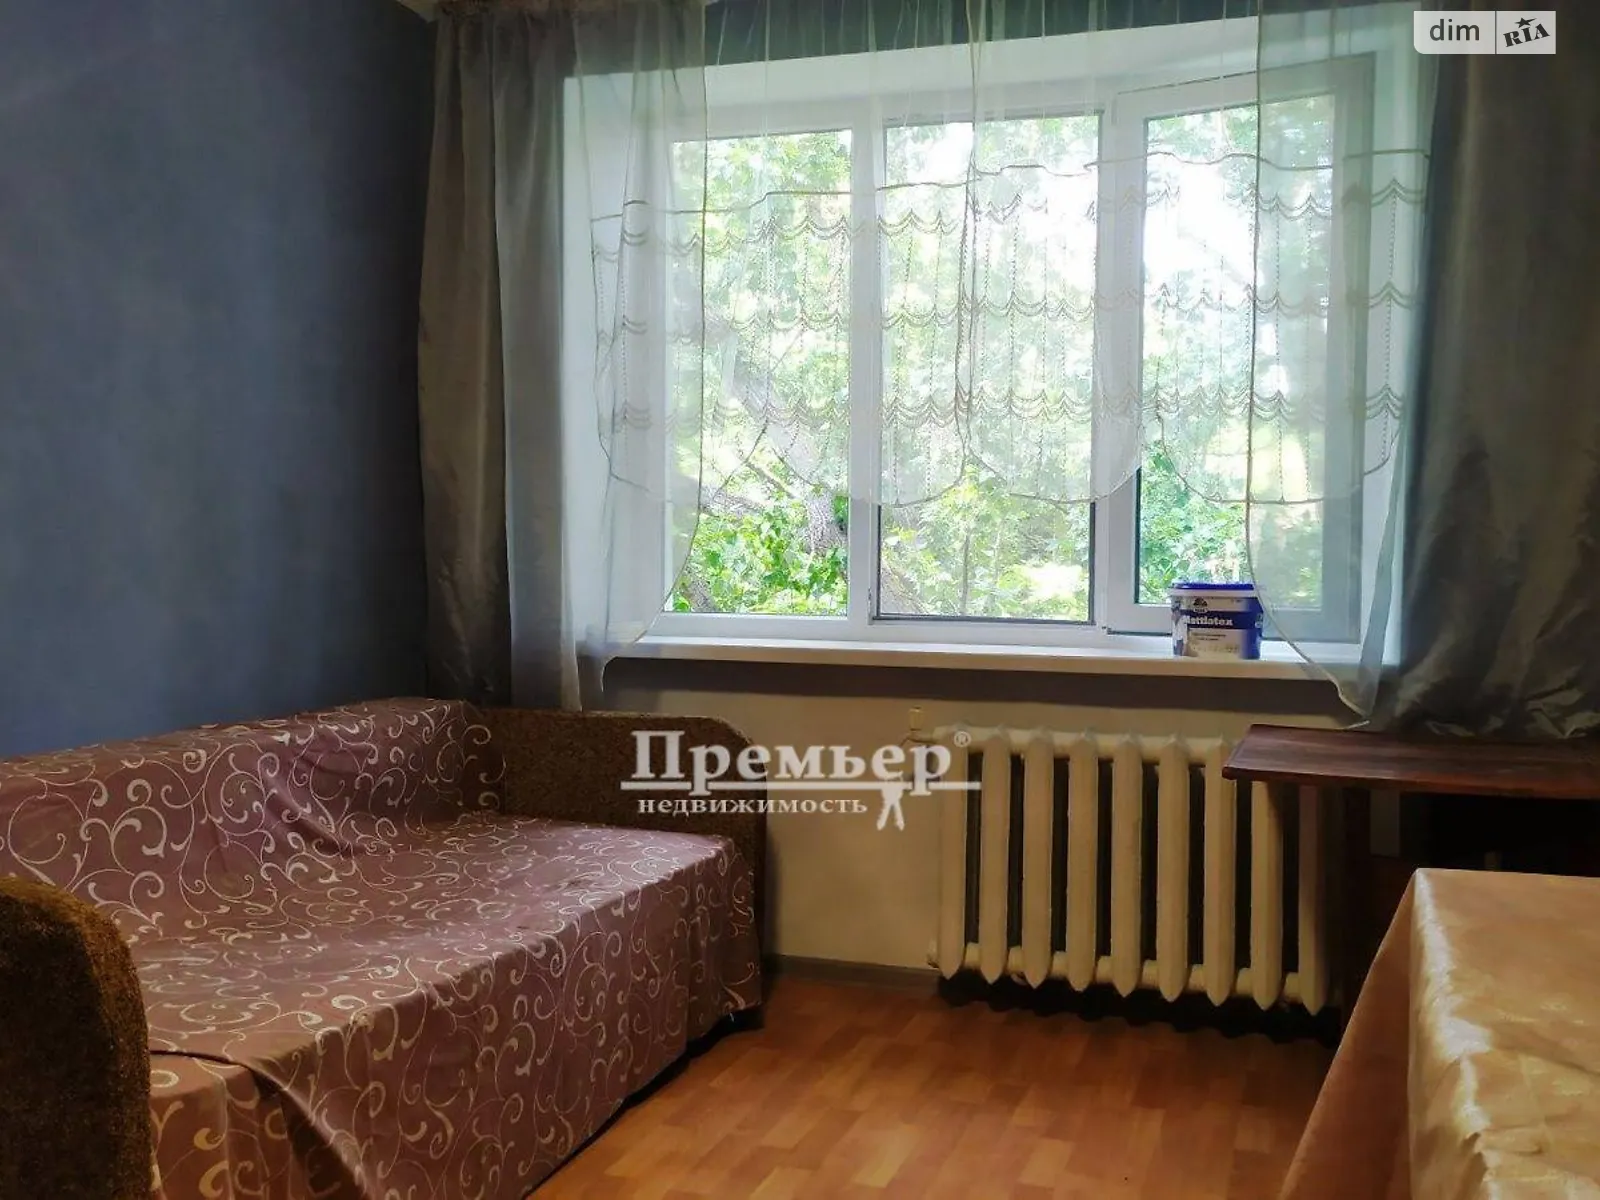 Продается комната 21.6 кв. м в Одессе, цена: 9500 $ - фото 1